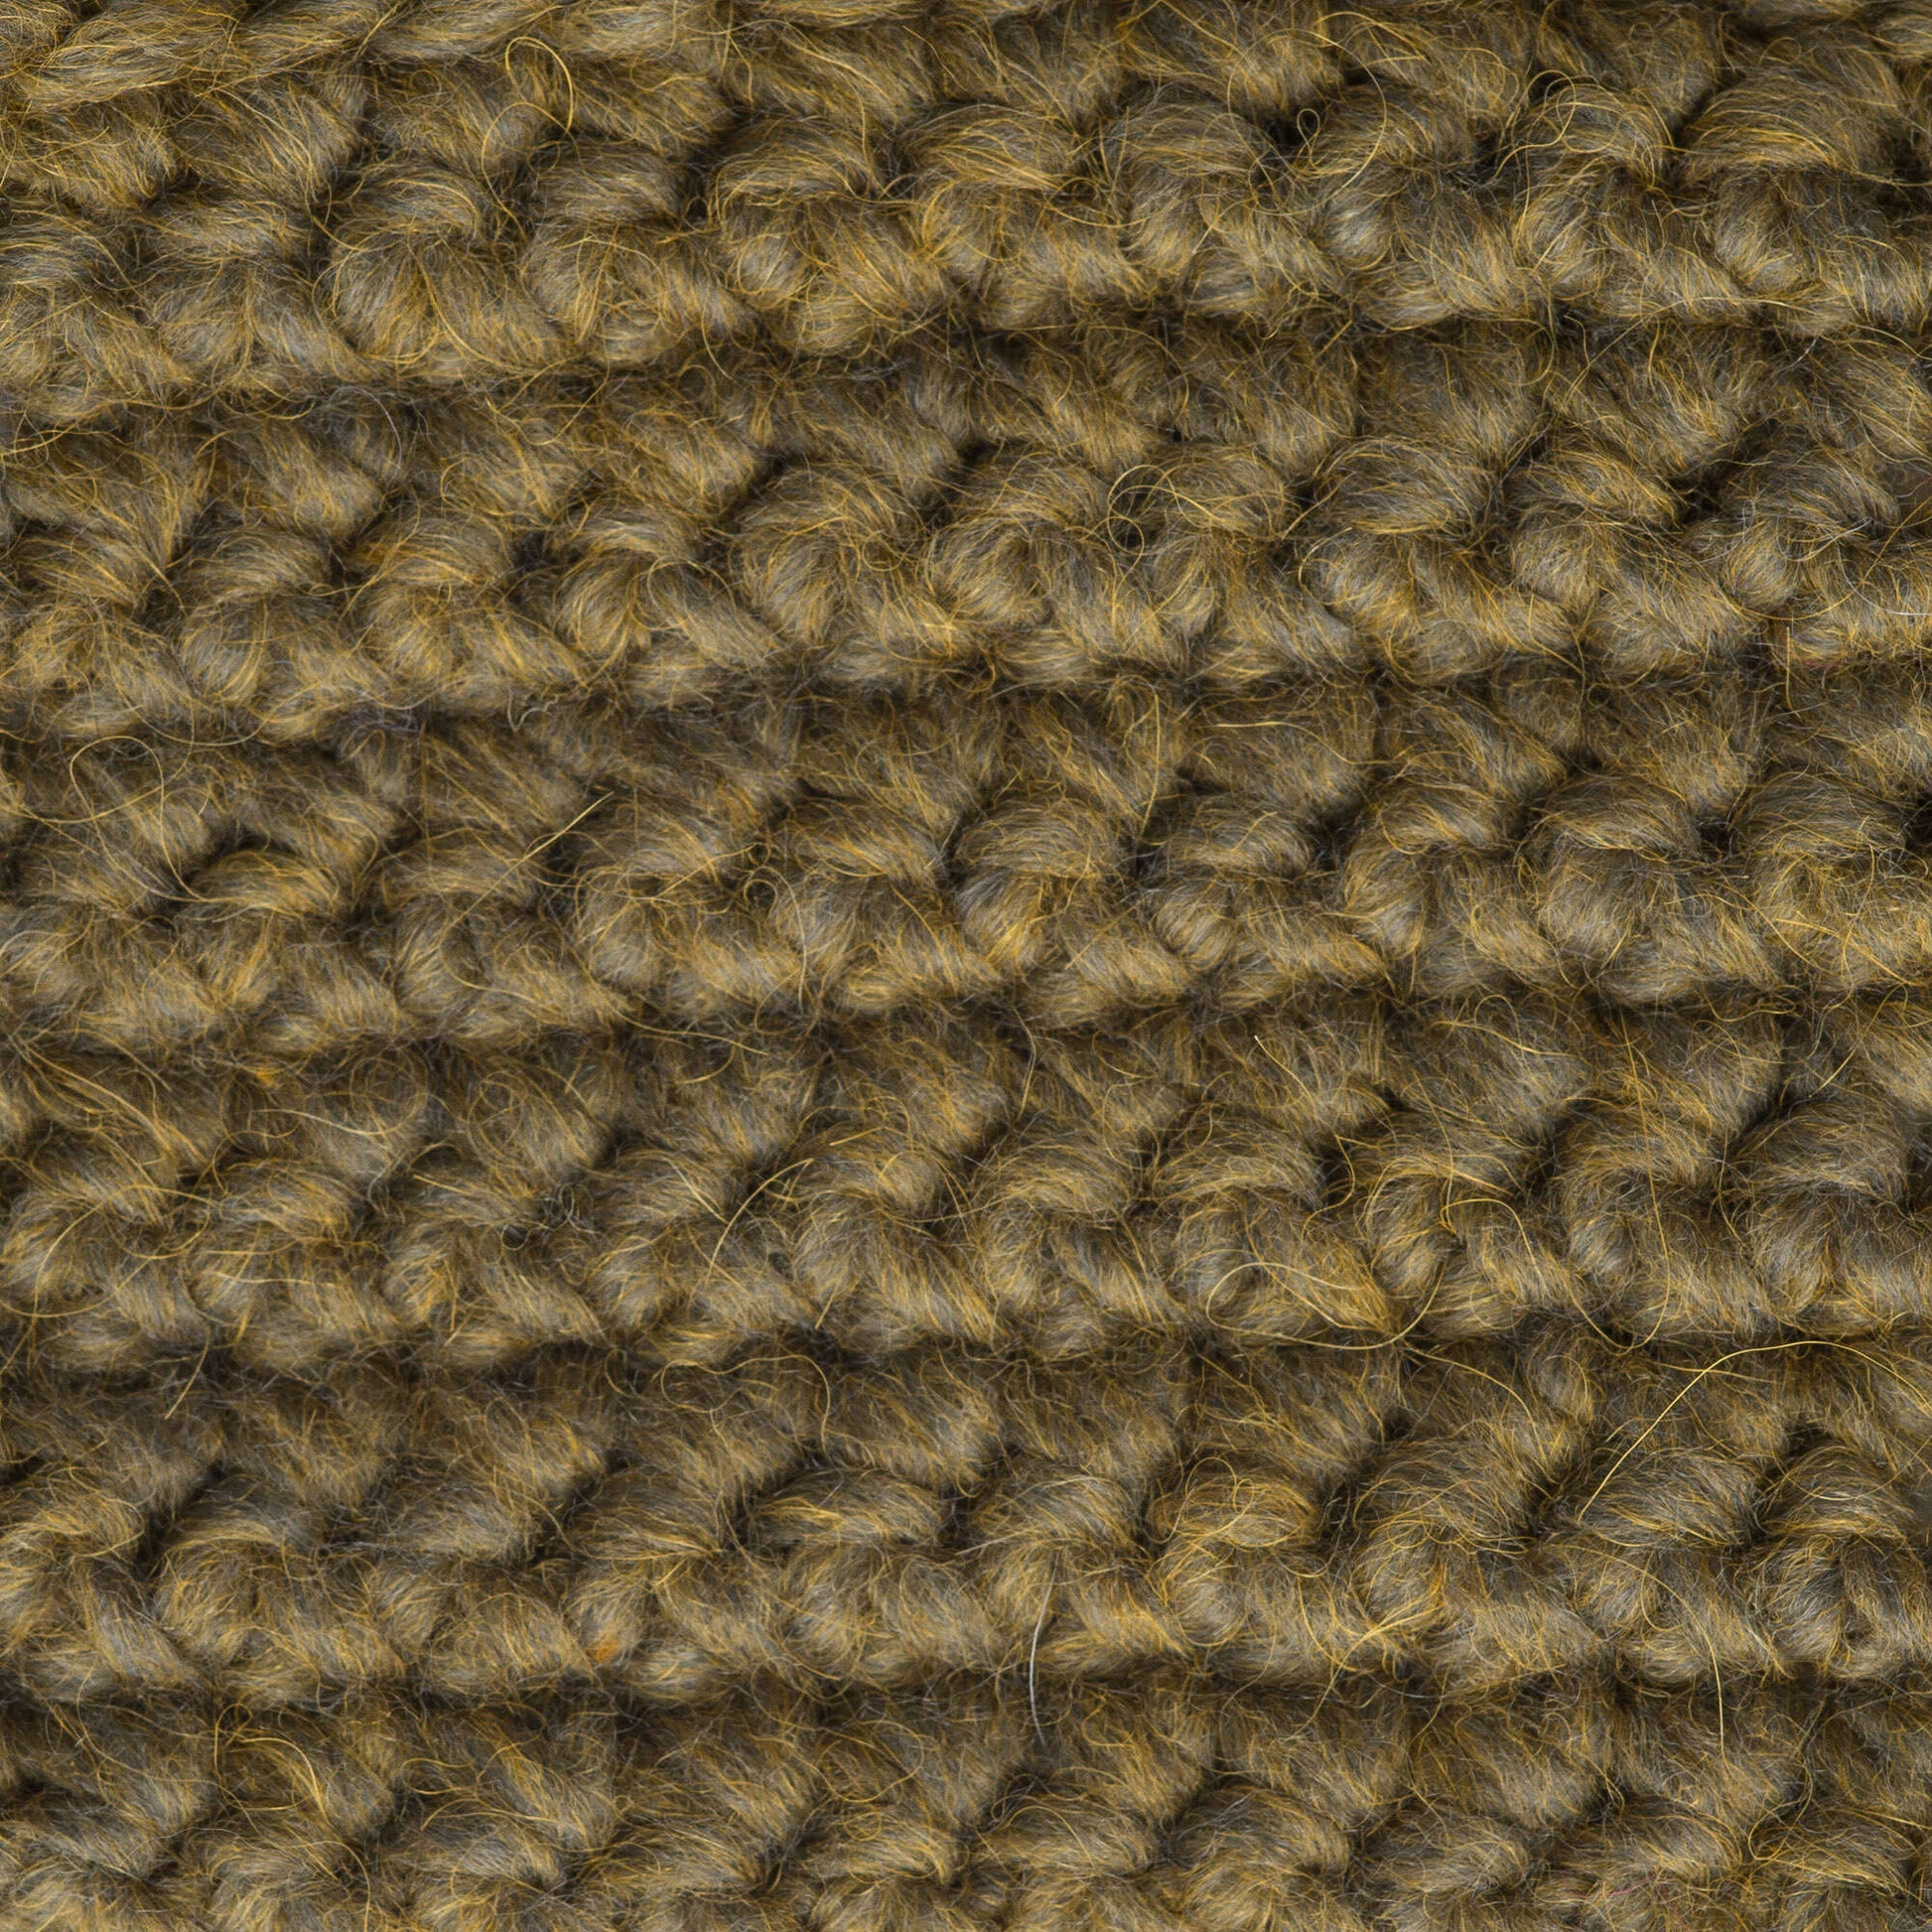 Patons Alpaca Blend Yarn - Discontinued Shades Lichen